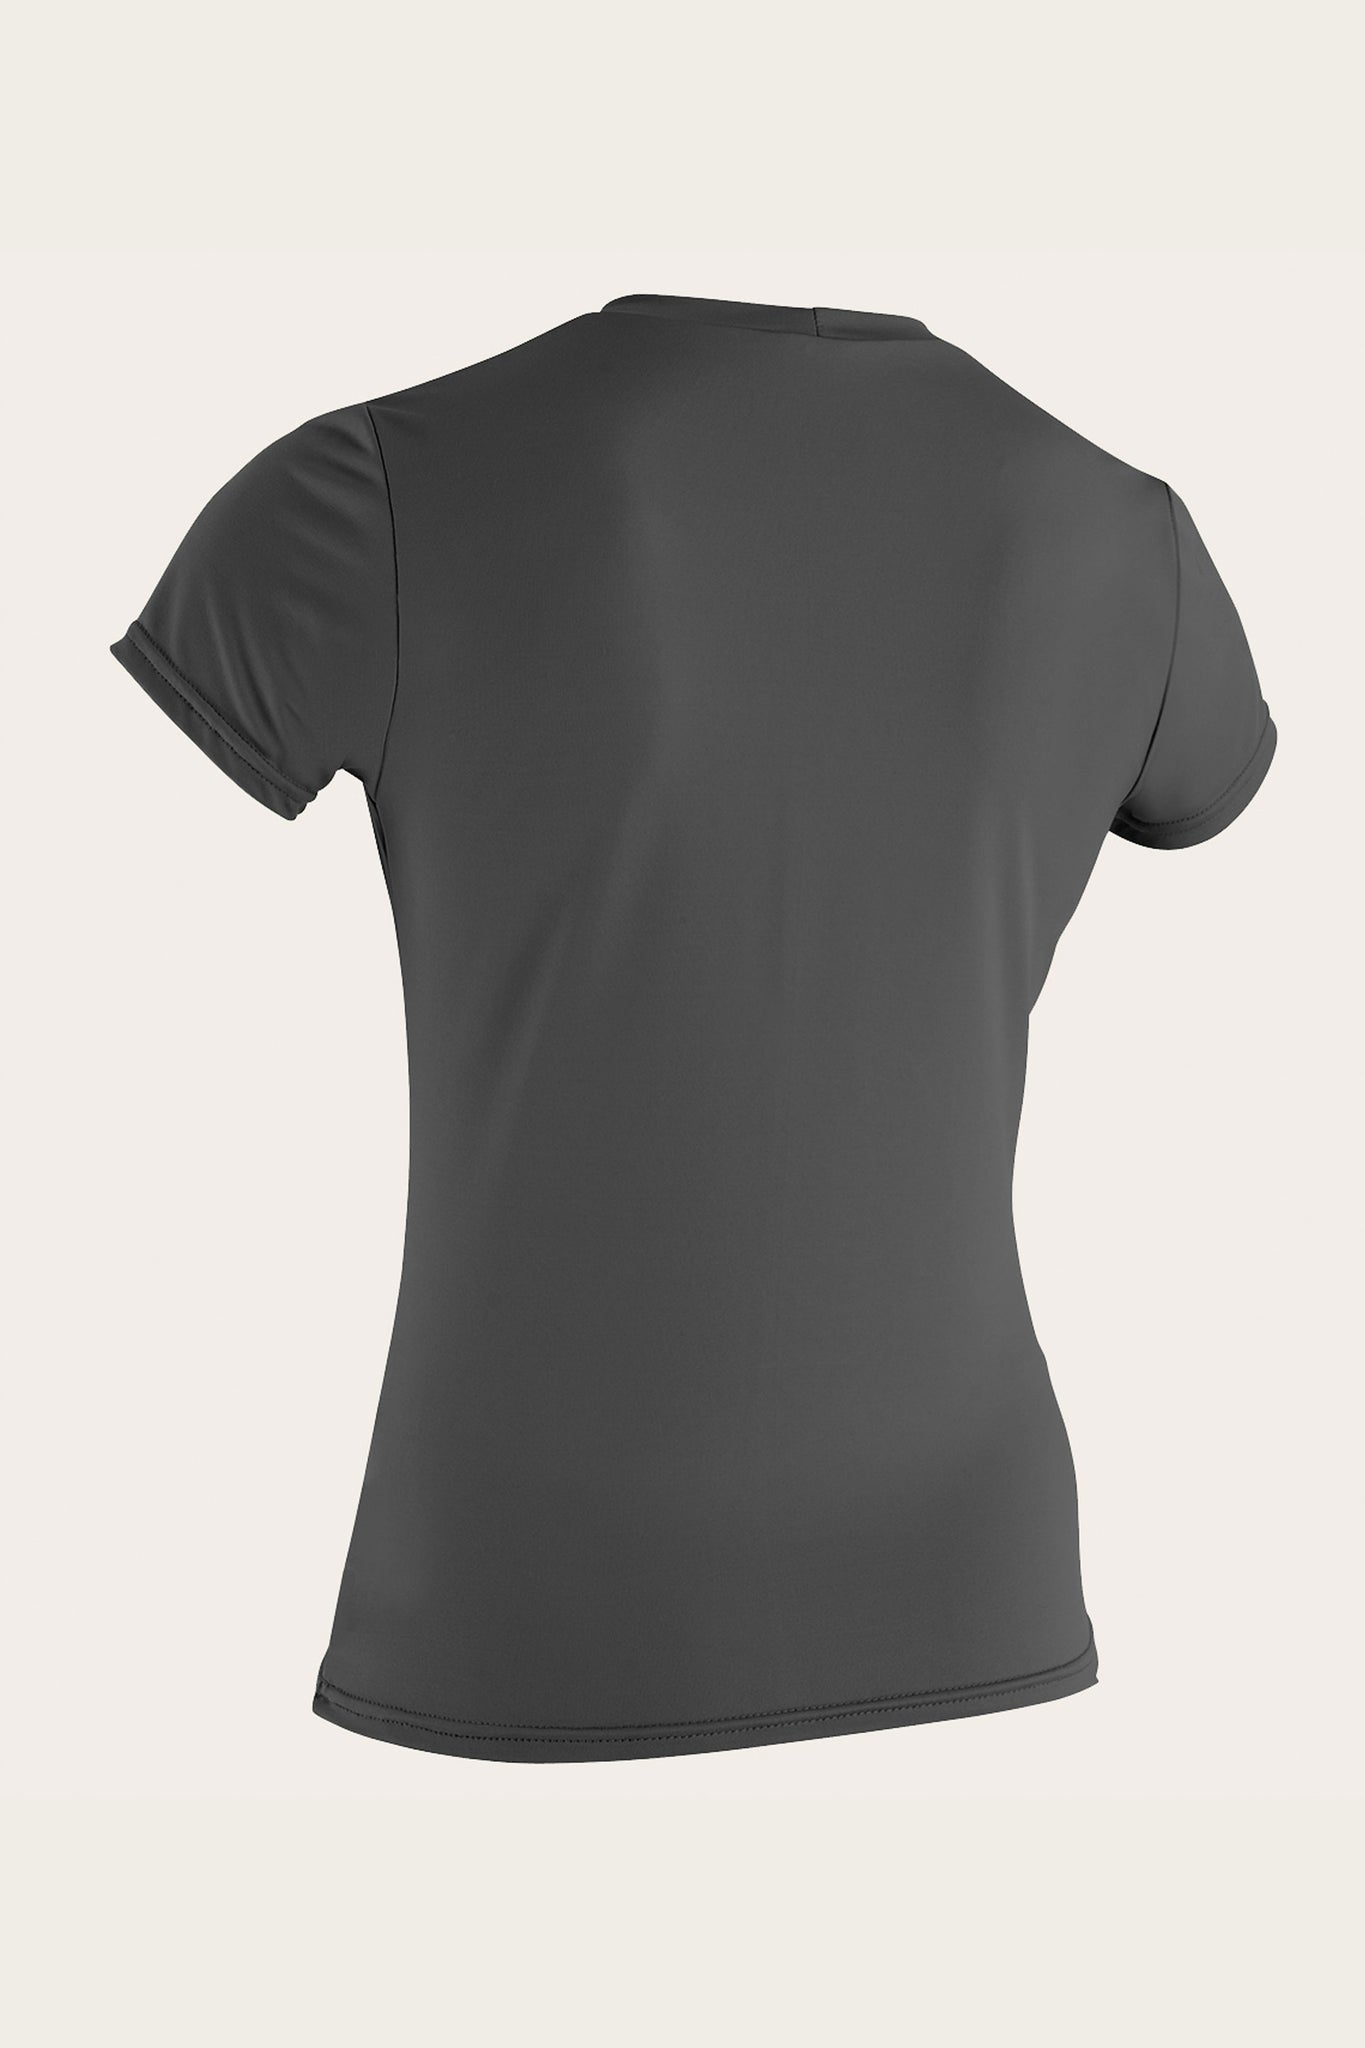 Women's Basic S/S Sun Shirt - Graphite | O'Neill